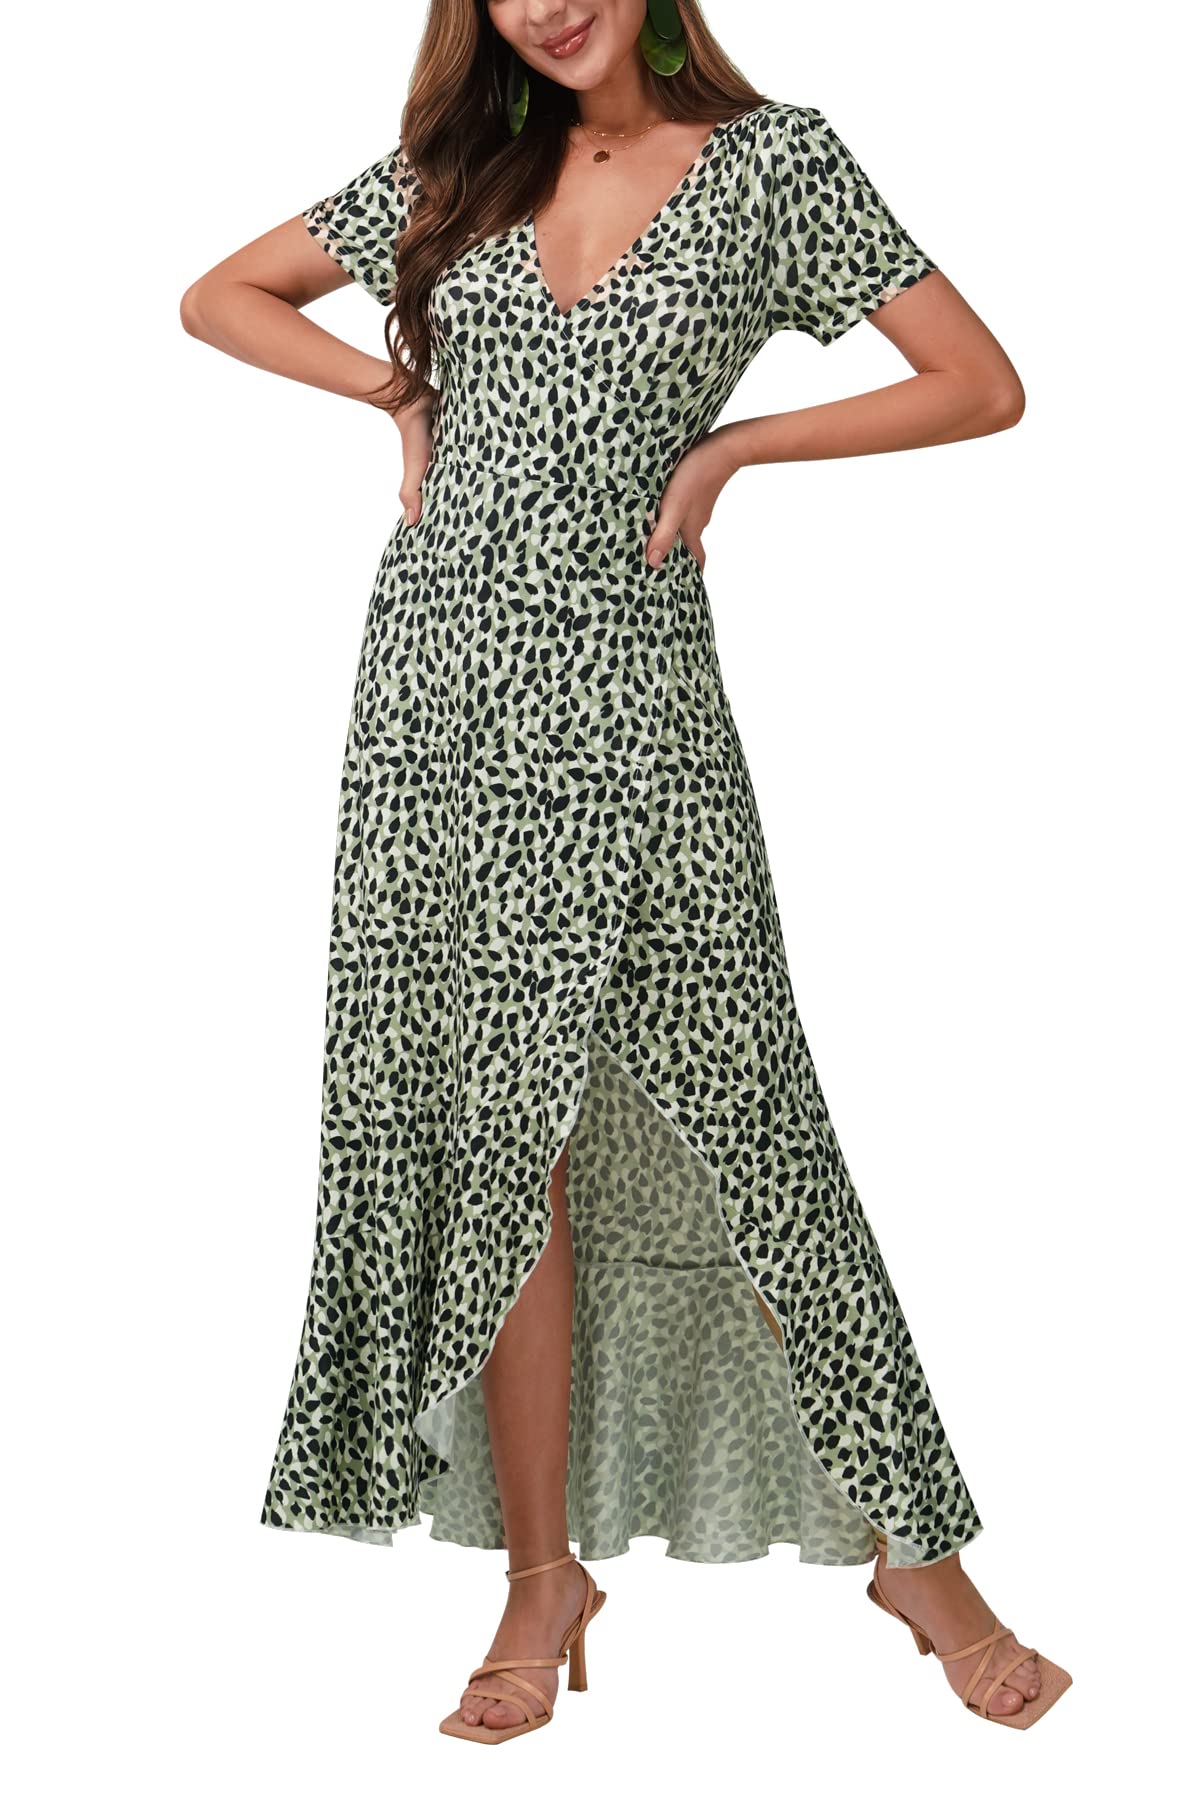 BAISHENGGT Womens Summer Short Sleeve Wrap V Neck Dress Green Petaloid Print Ruffle Hem Bohemian Flowy Long Maxi Dresses